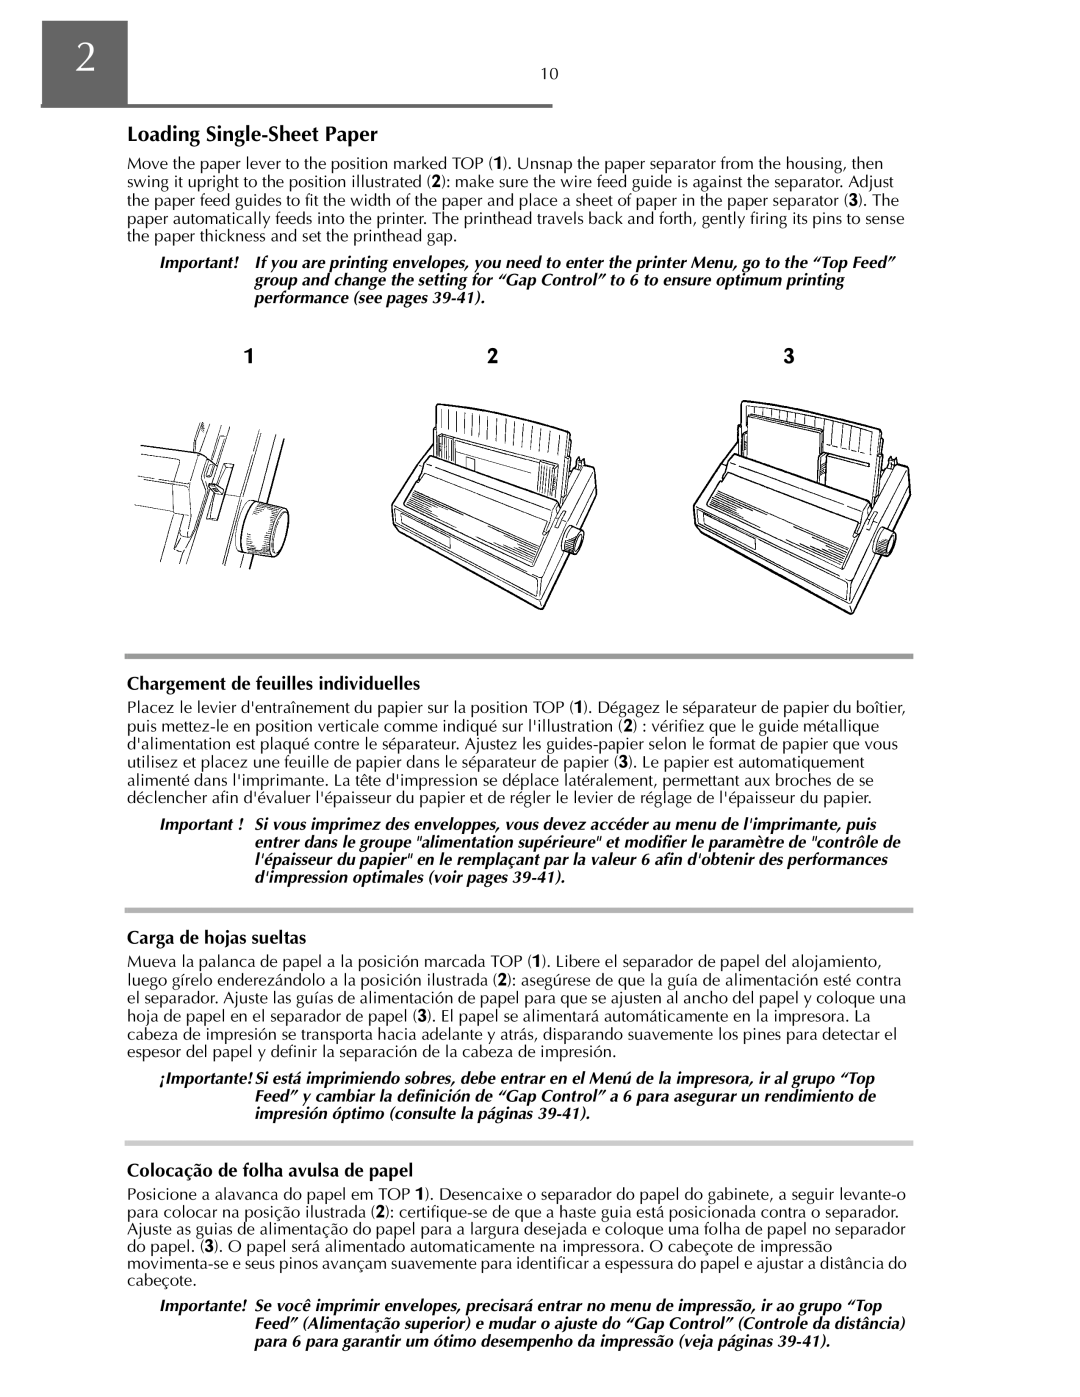 Oki ML590 manual Loading Single-Sheet Paper, Chargement de feuilles individuelles, Carga de hojas sueltas 